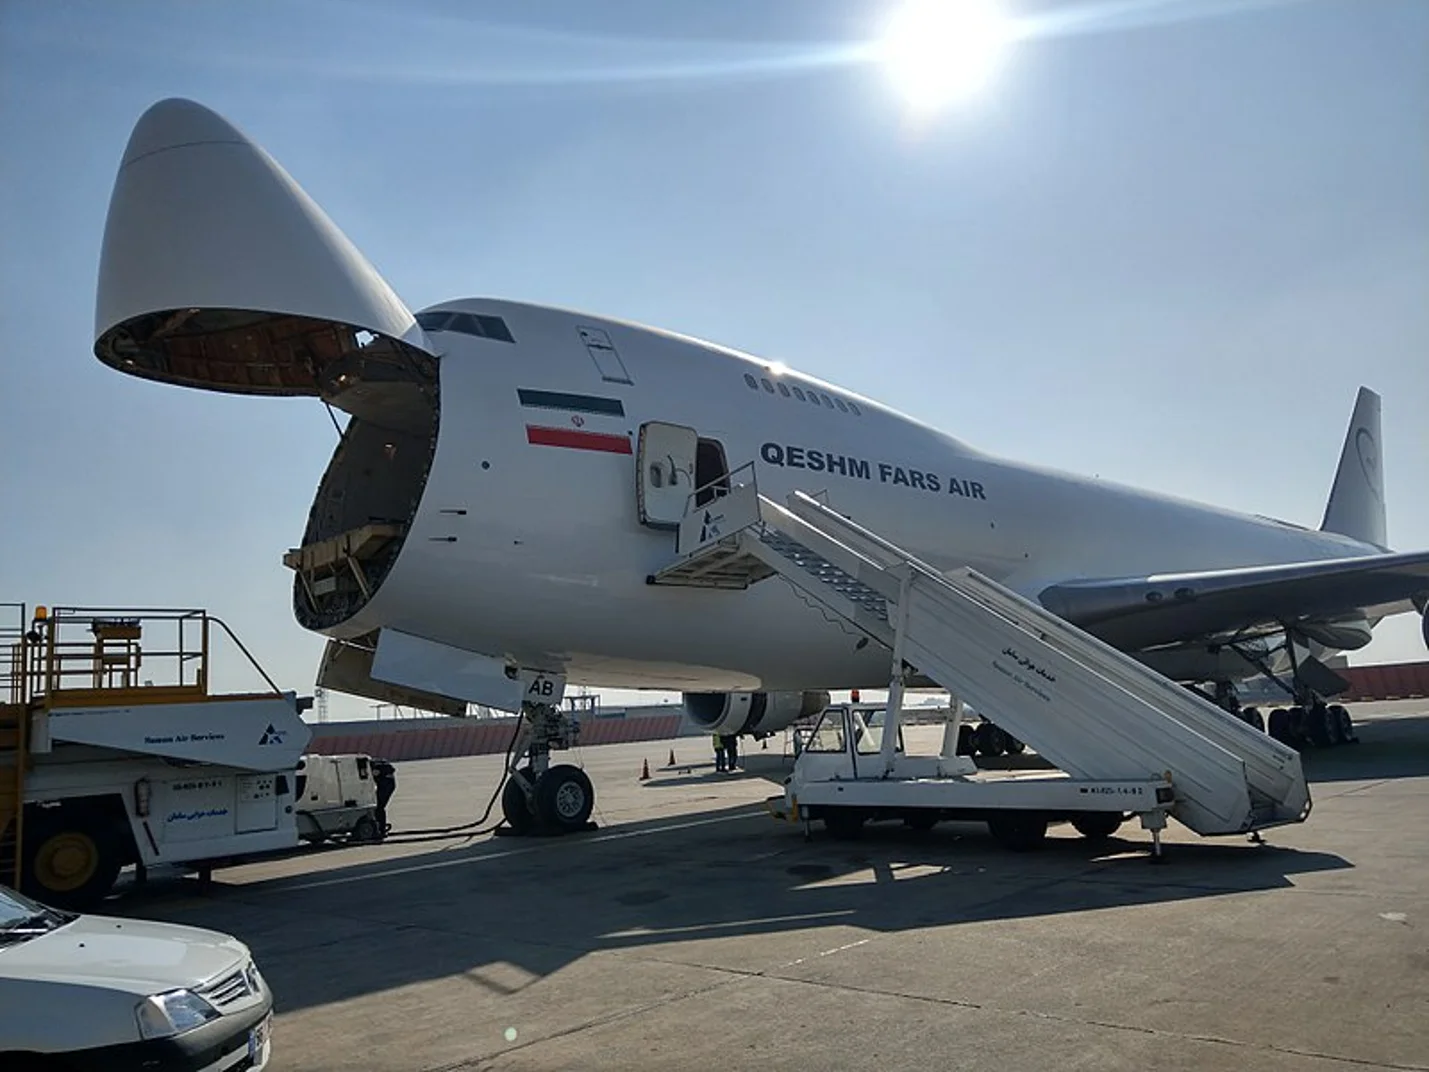 Avion de Qeshm Fars Air, subsidiaria de Mahan Air, en el aeropuerto de Beirut